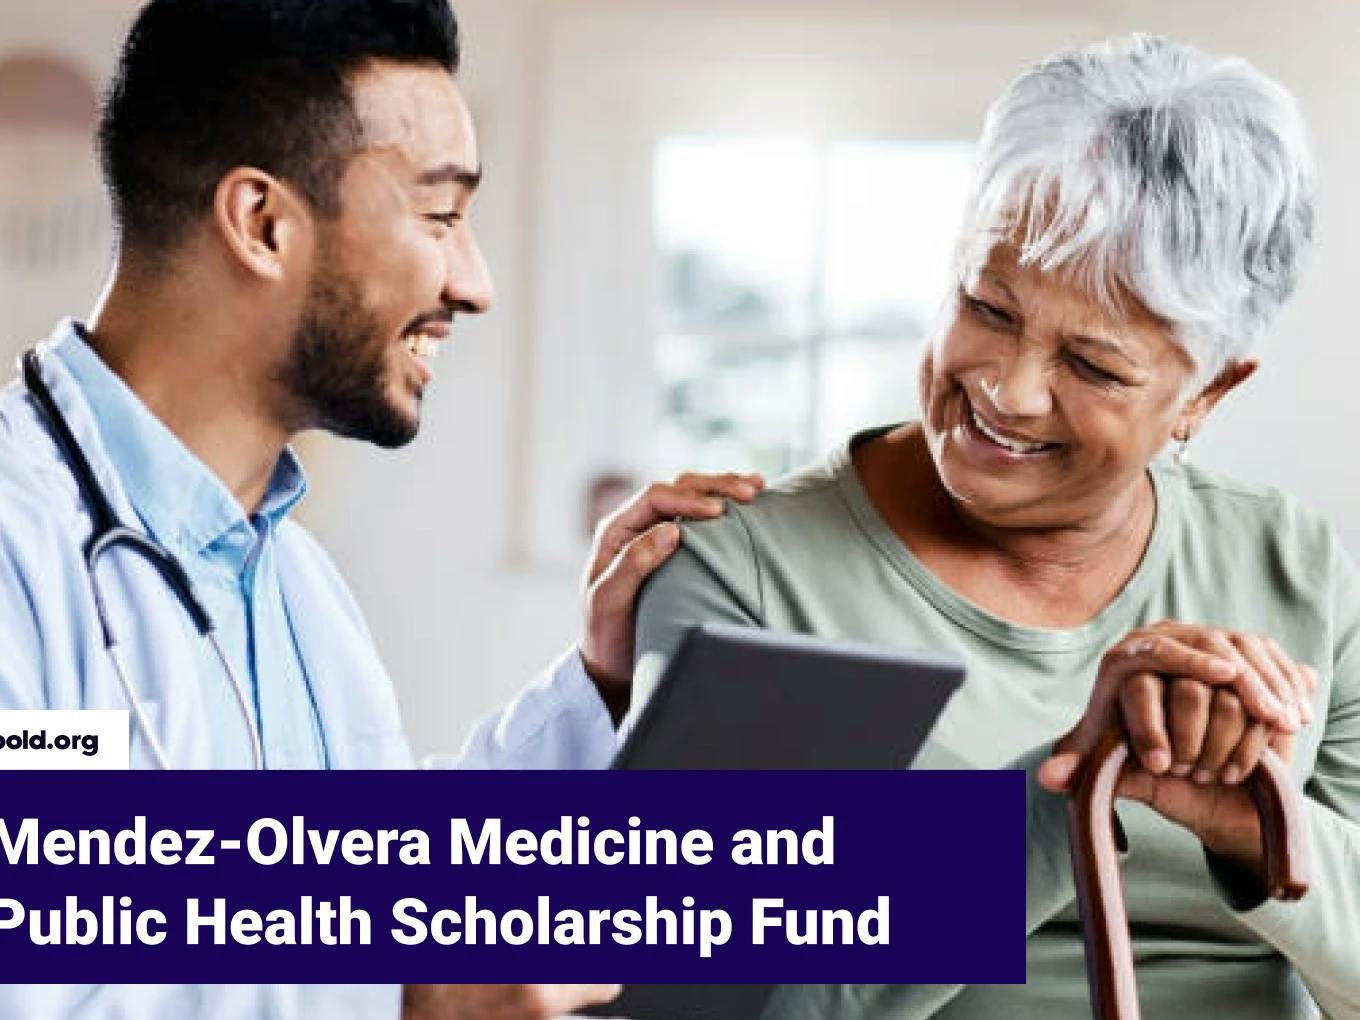 Mendez-Olvera Medicine and Public Health Scholarship Fund